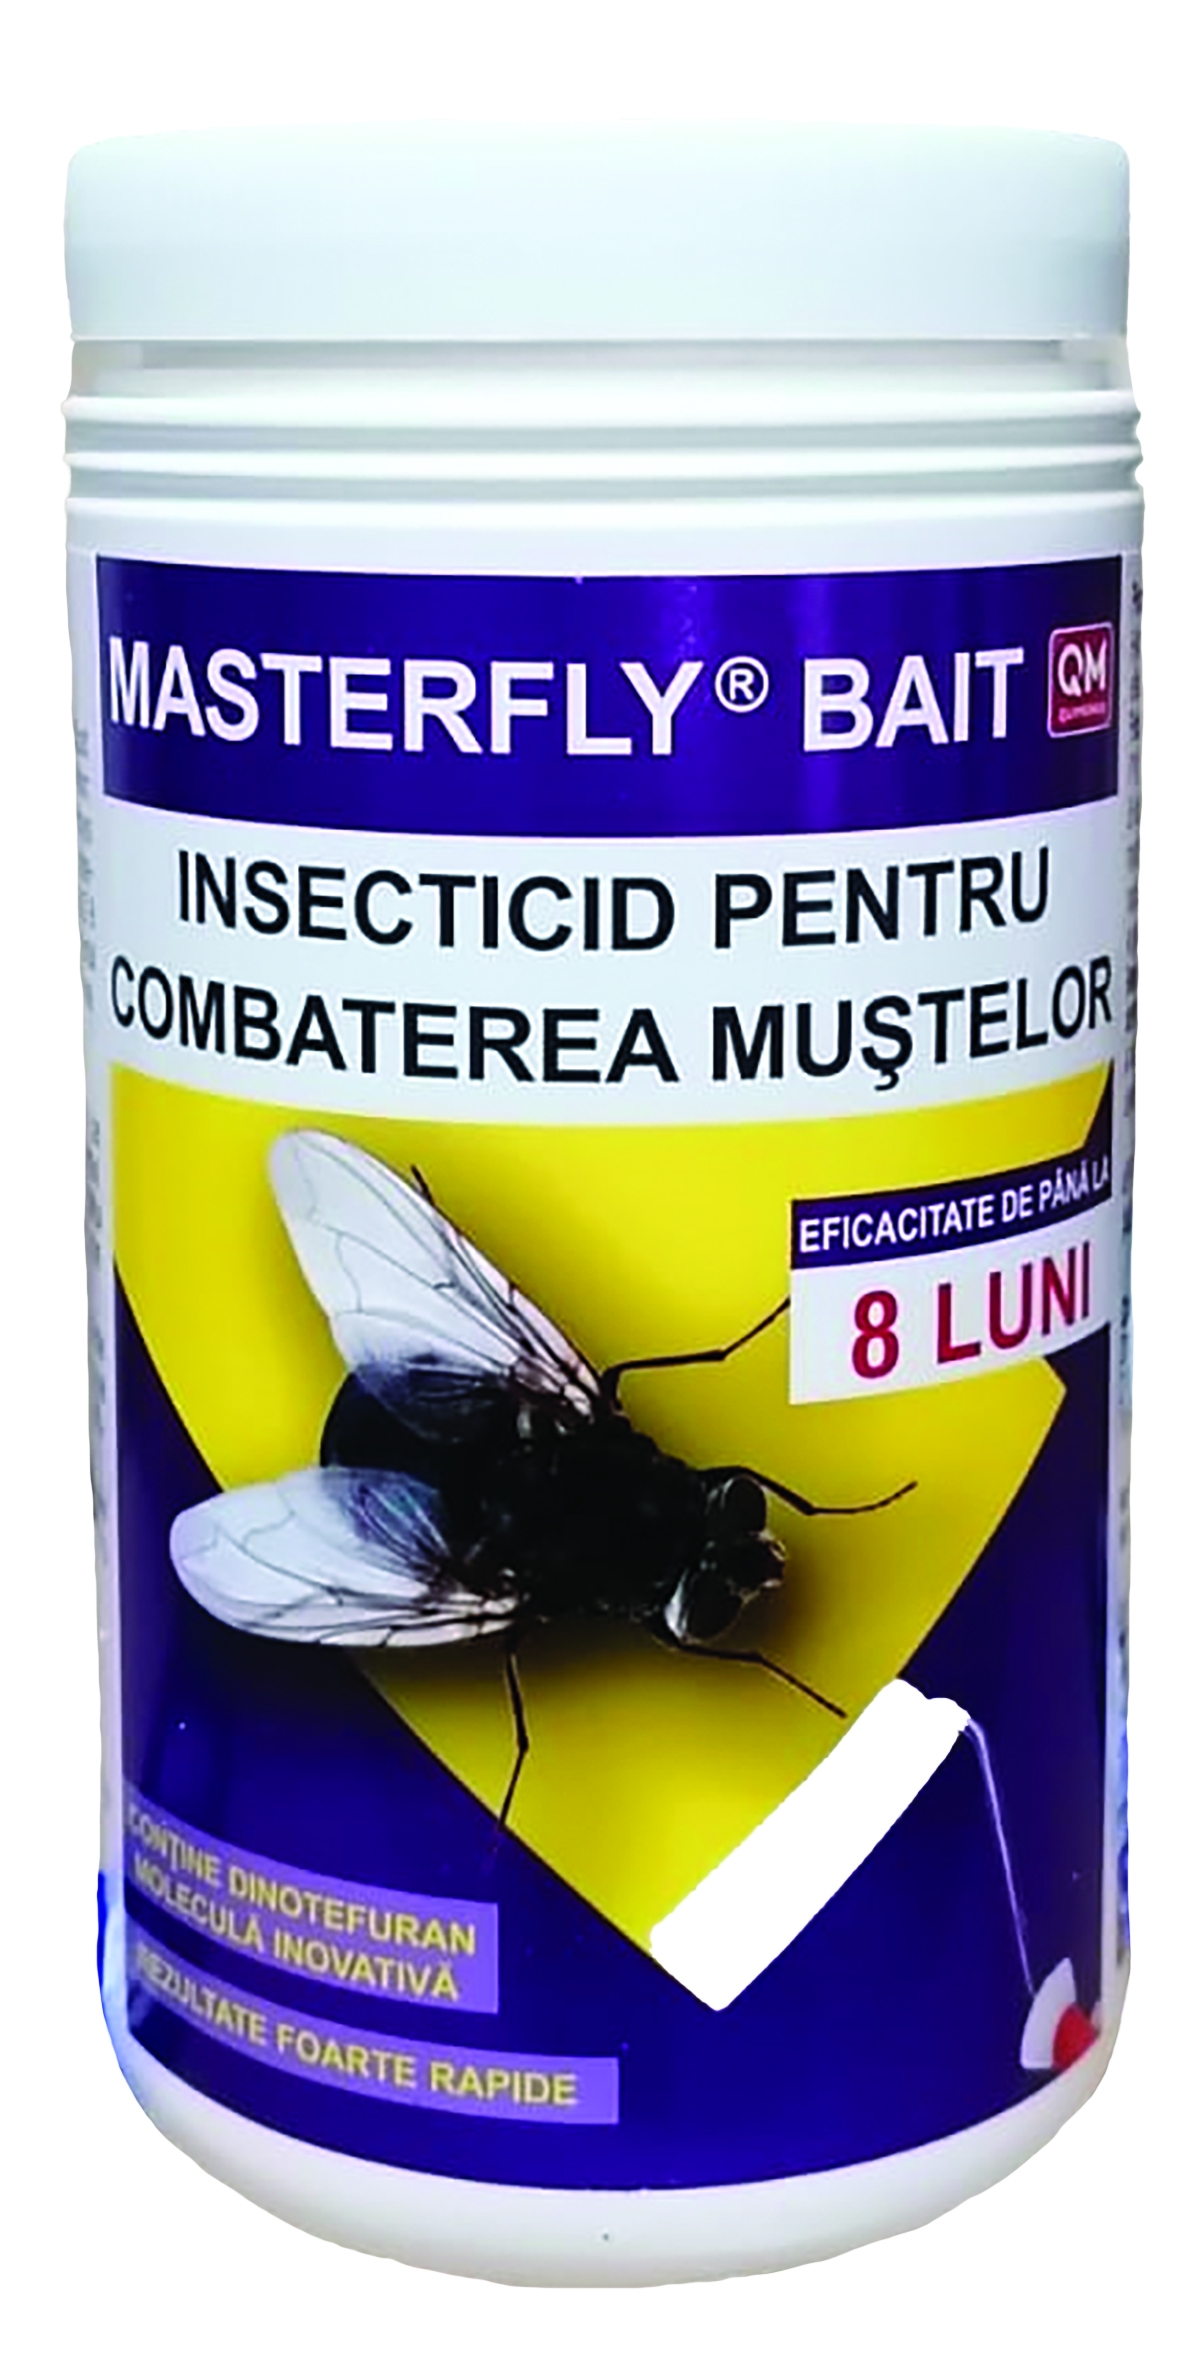 Masterfly Bait 500 g, insecticid pentru combaterea mustelor petmart.ro